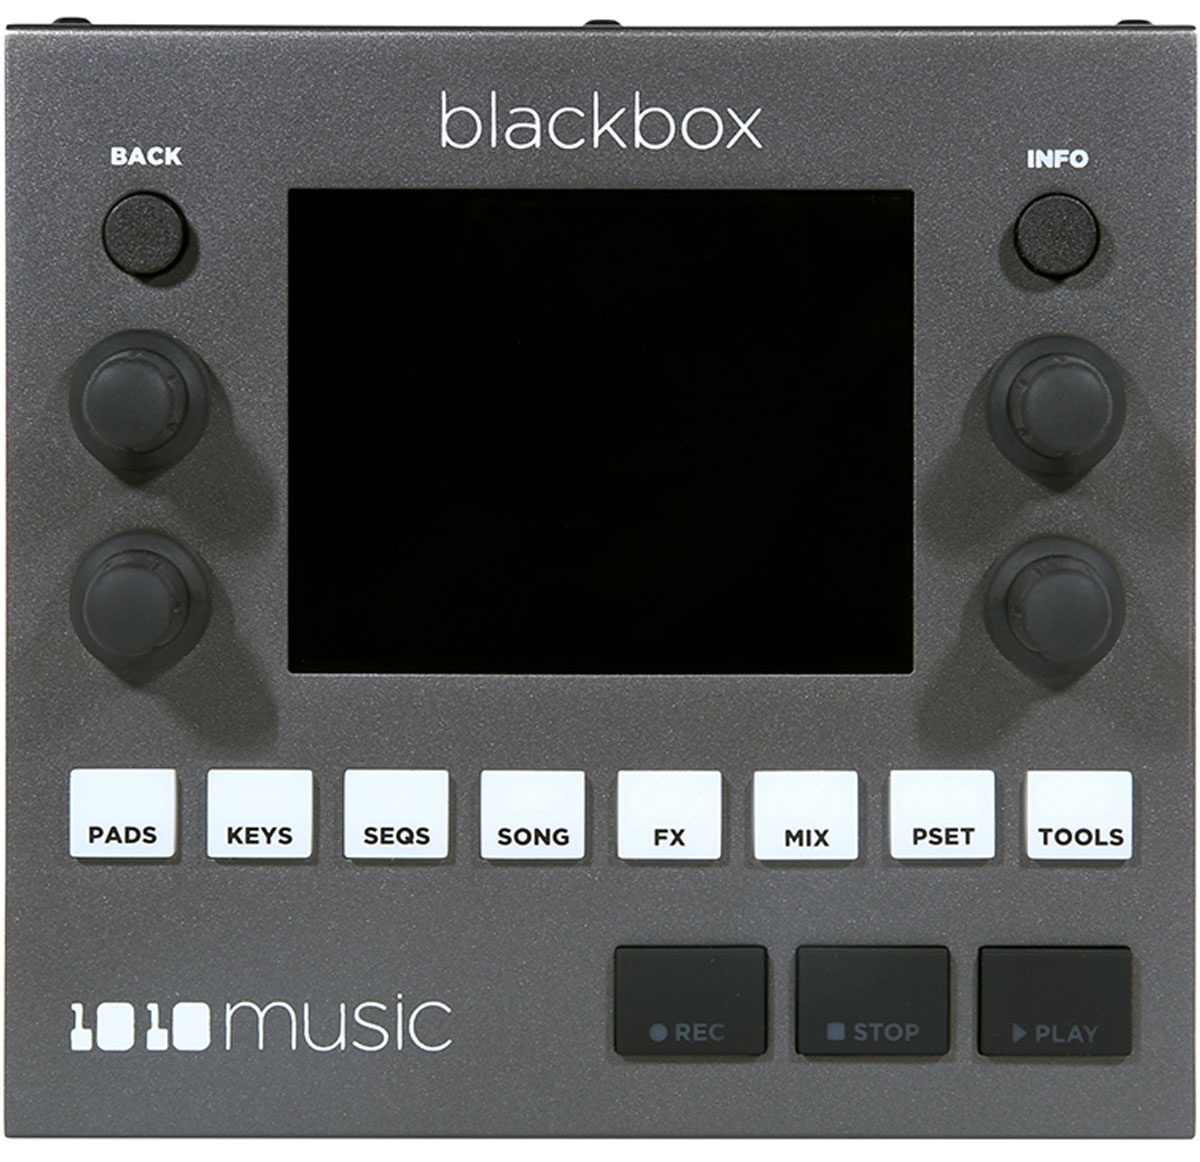 1010music Blackbox по цене 86 730 ₽